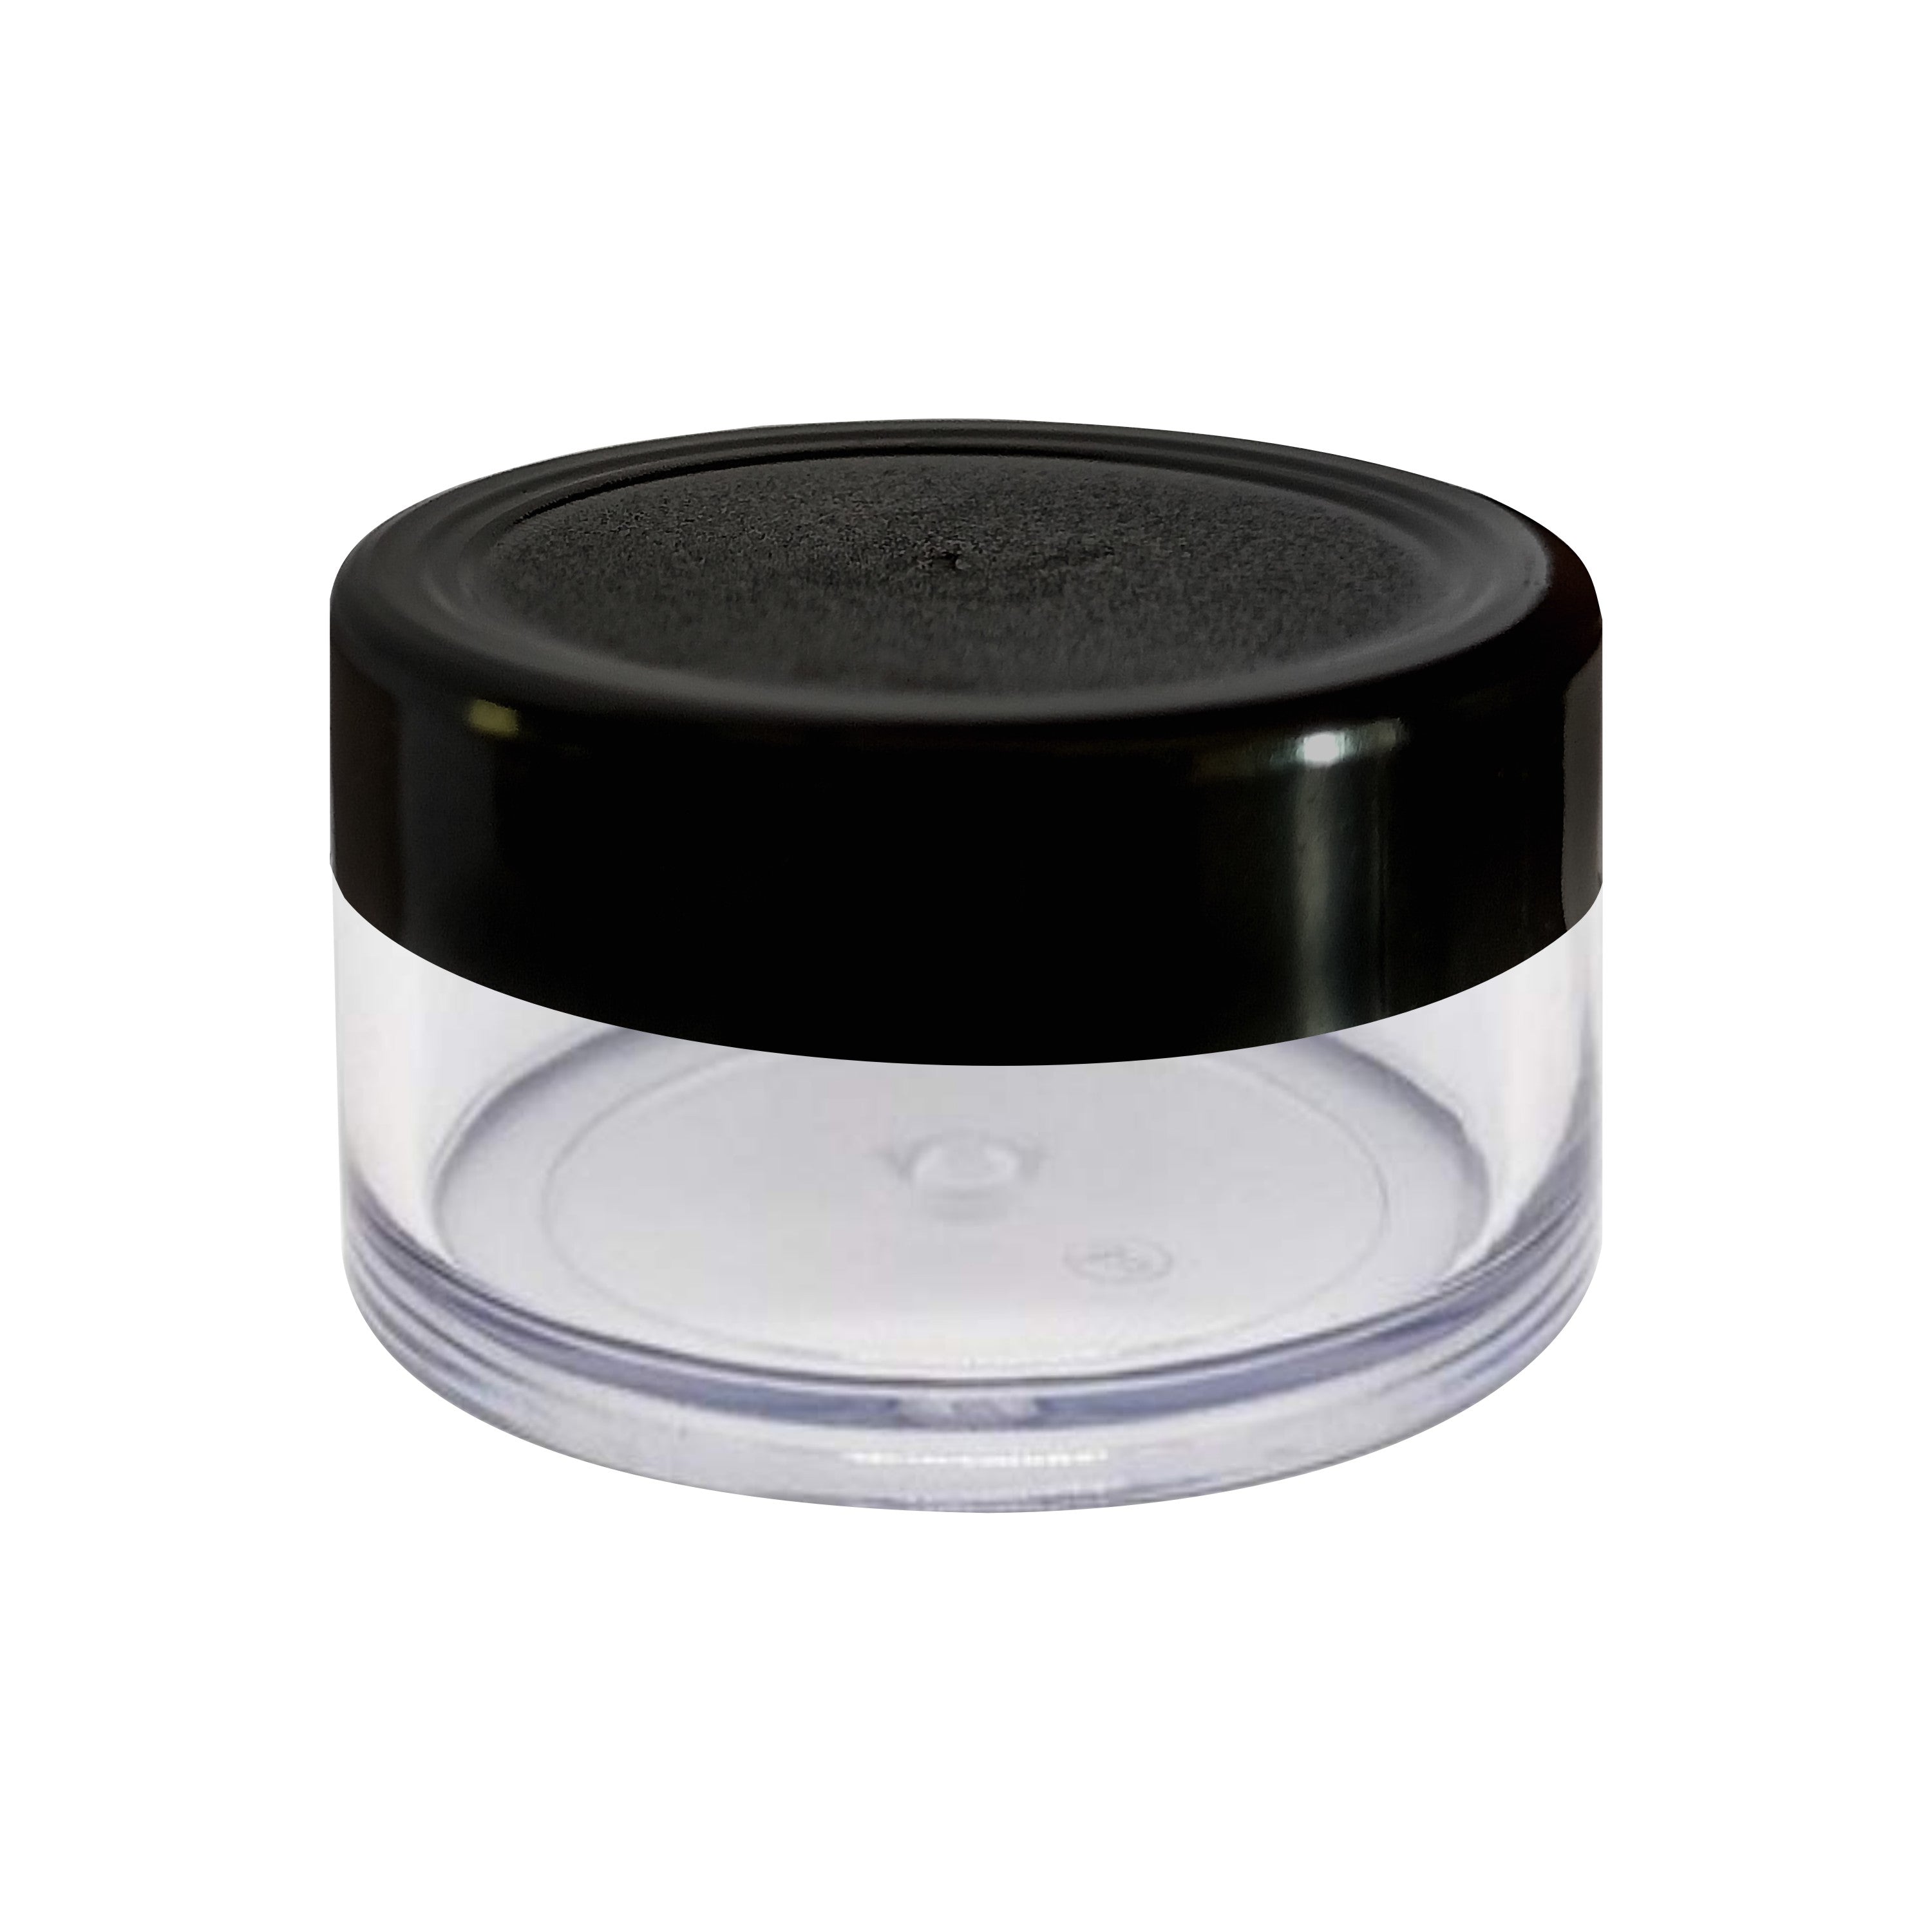 Acrylic Shan Jar with black lid- 8gm, 25gm, 30gm, 15gm, 50gm, 100gm [ZMJ02]